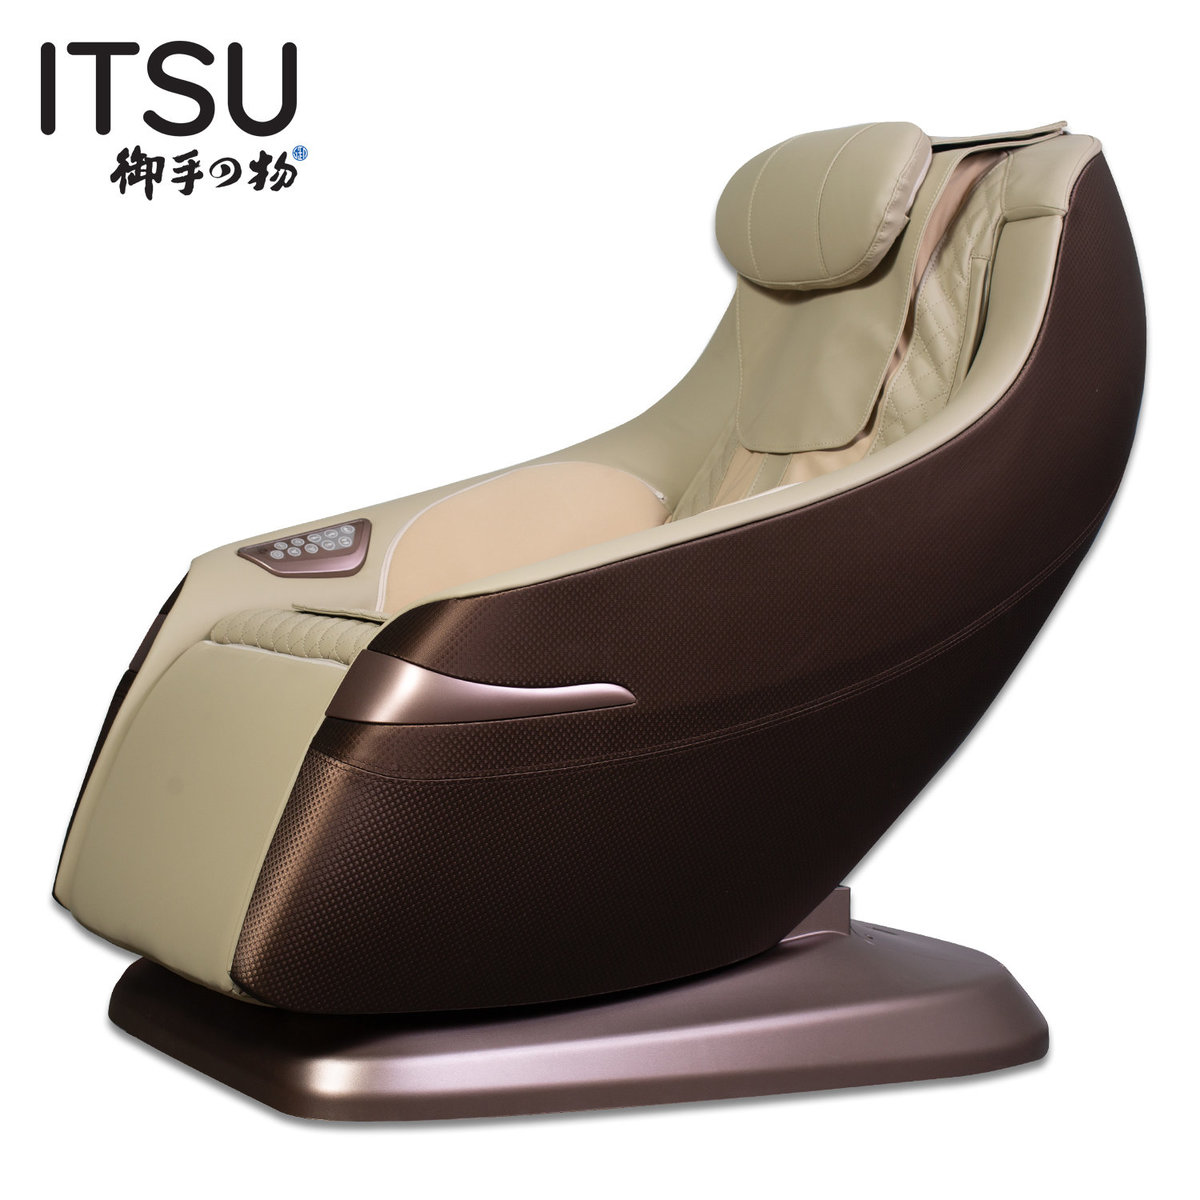 Itsu Suki Massage Chair Free Gift The 3d Neck Massager X 1 Iknee X 1 Consumption Voucher Offer Color Beige Hktvmall The Largest Hk Shopping Platform